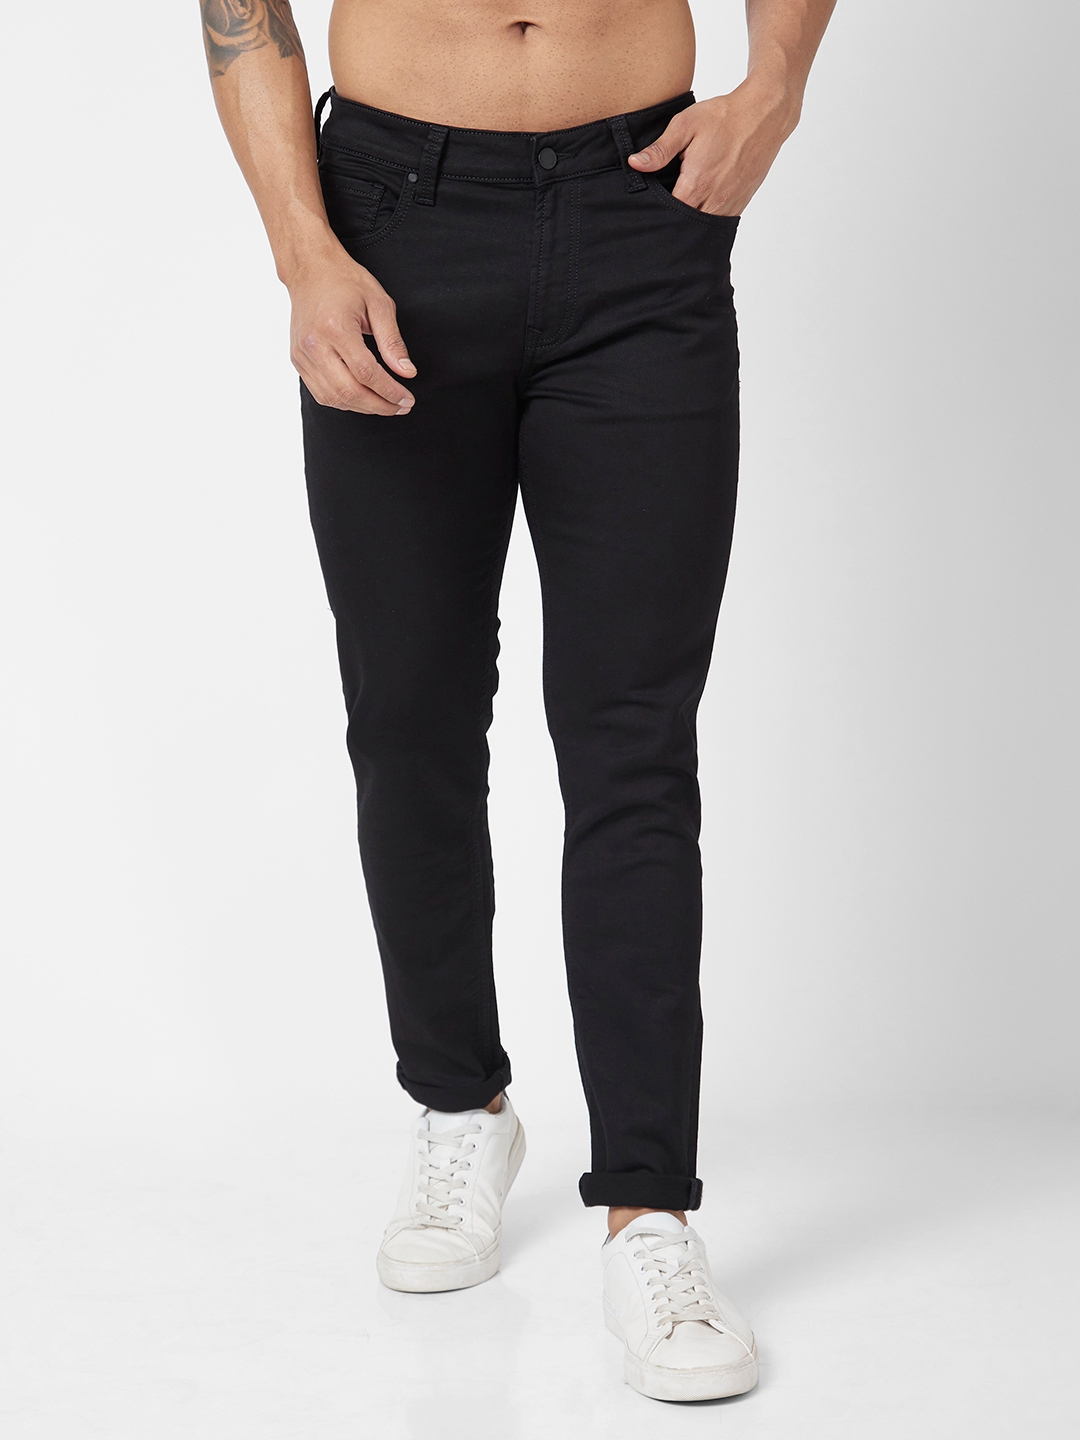 spykar | Spykar Men Black Cotton Stretch Super Slim Fit Tapered Length Clean Look Low Rise Jeans (Super Skinny) 0